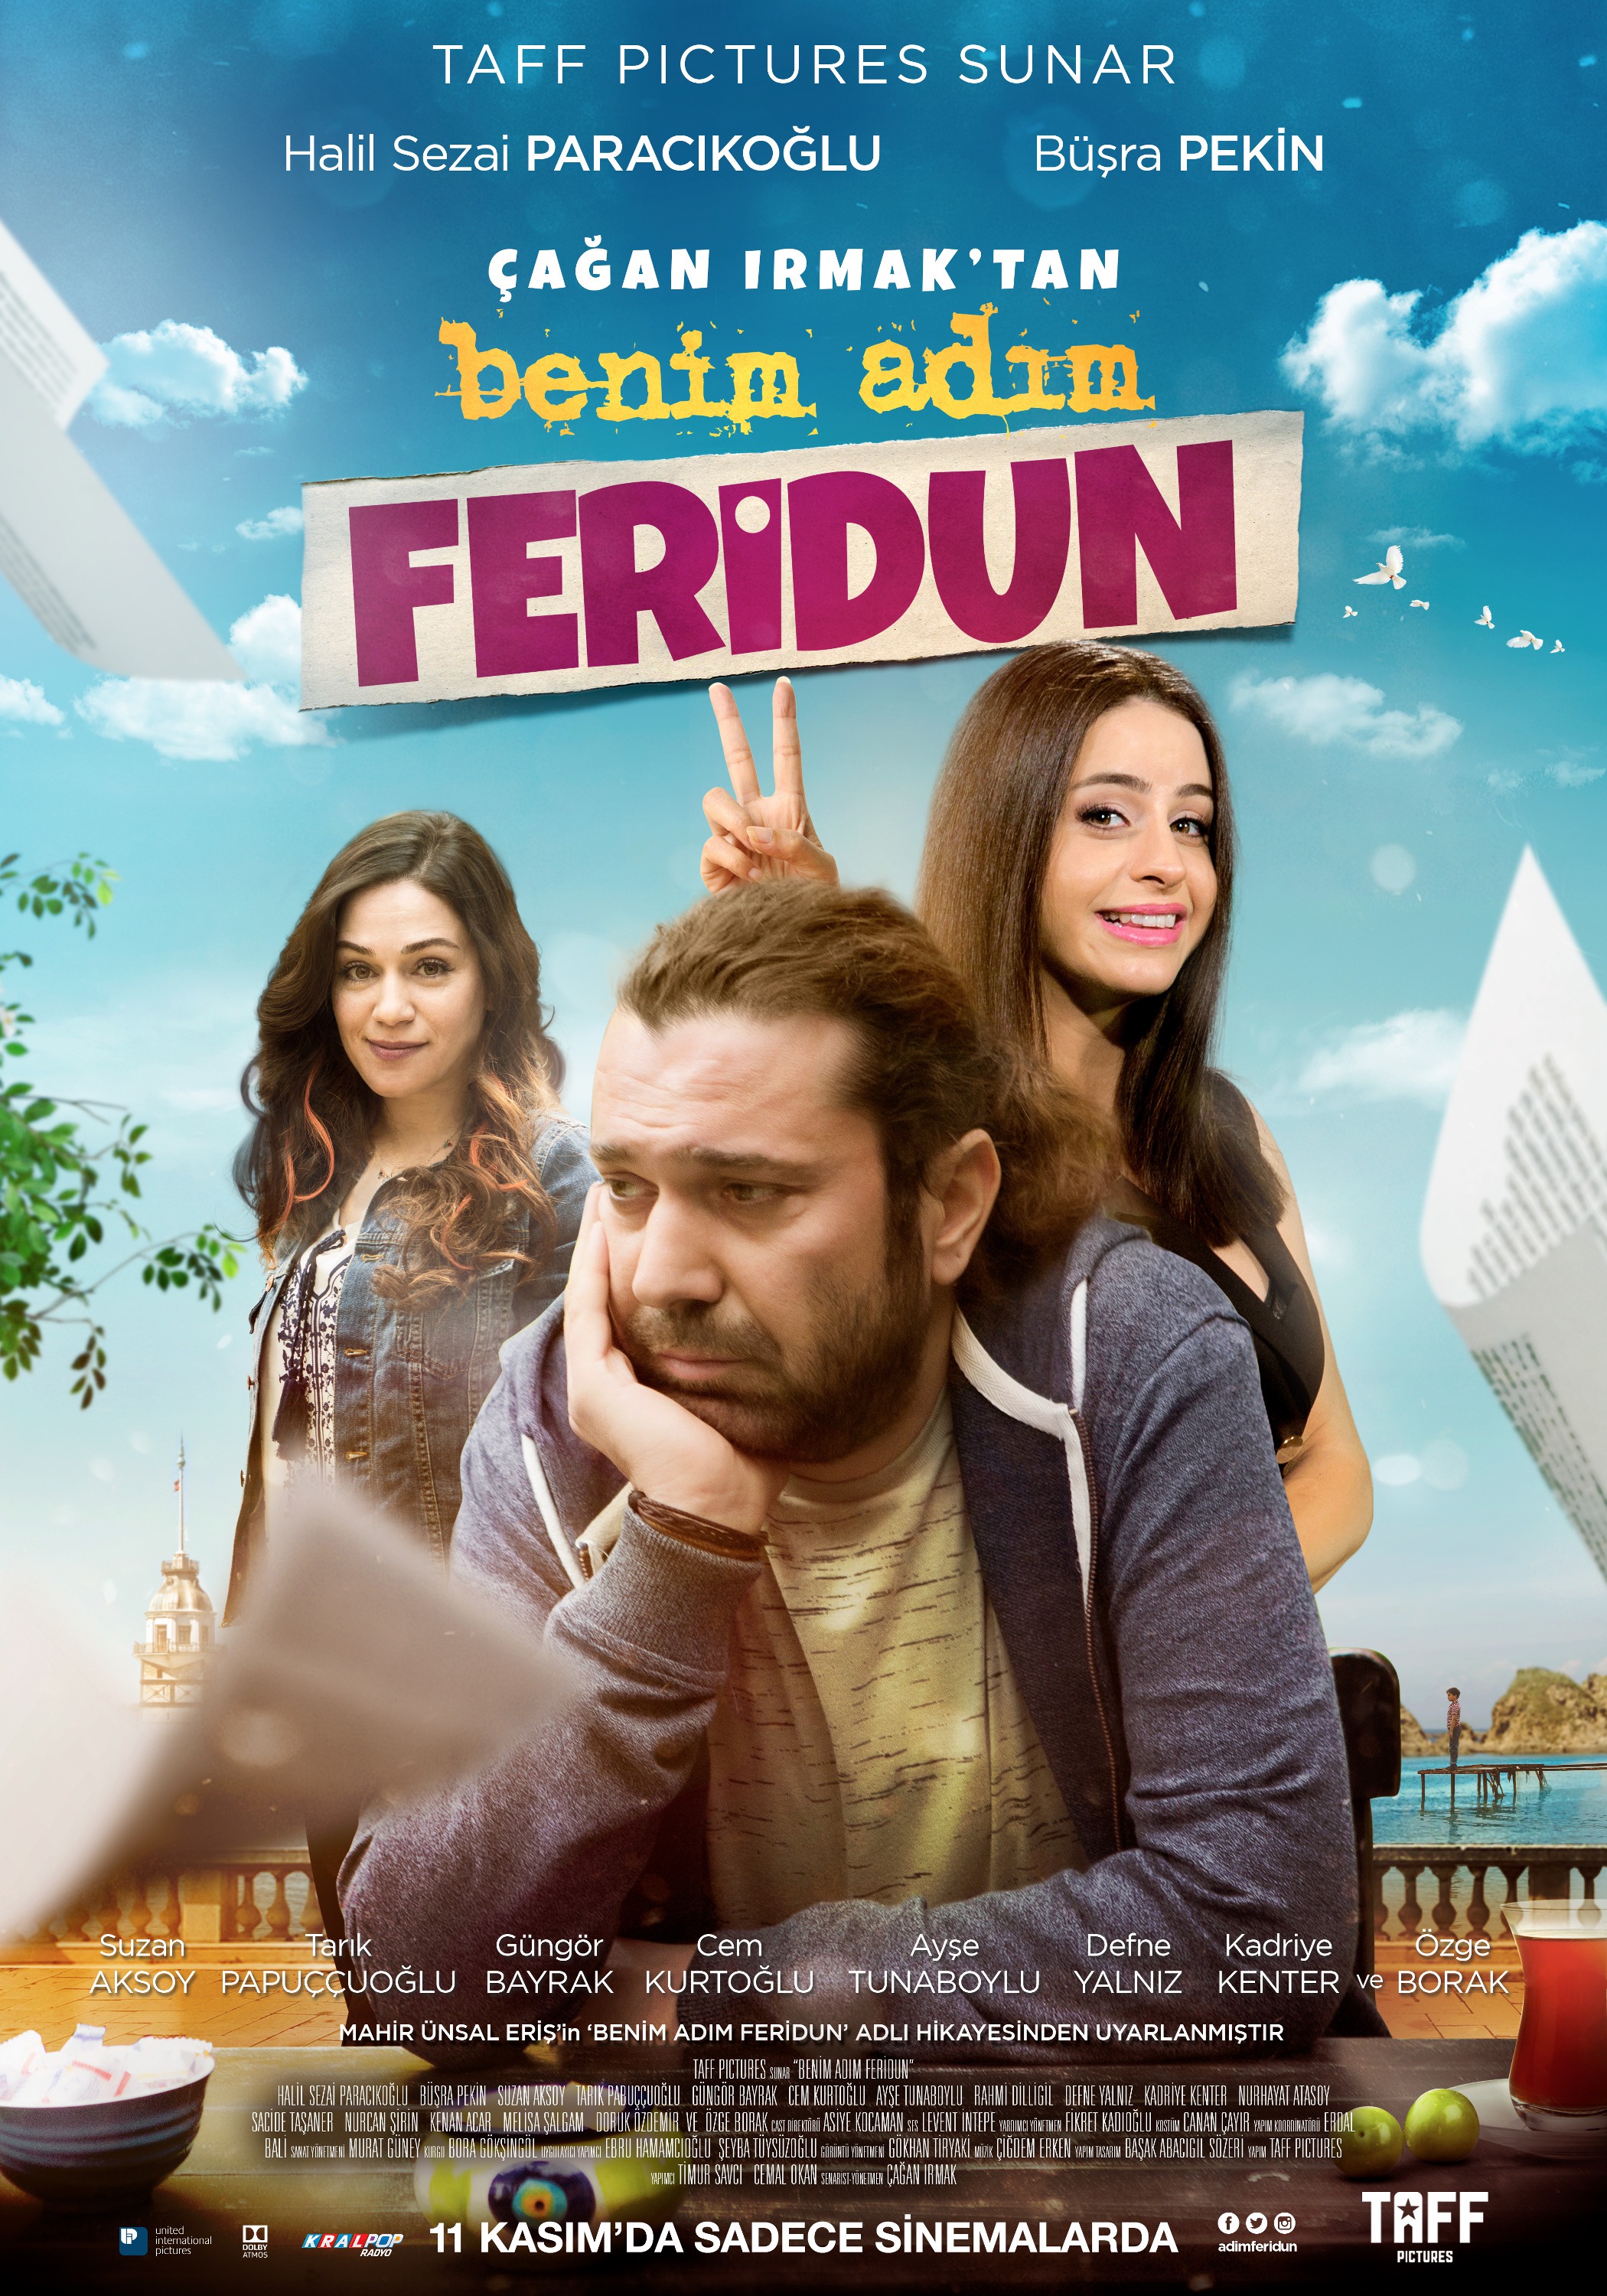 Mega Sized Movie Poster Image for Benim Adim Feridun 